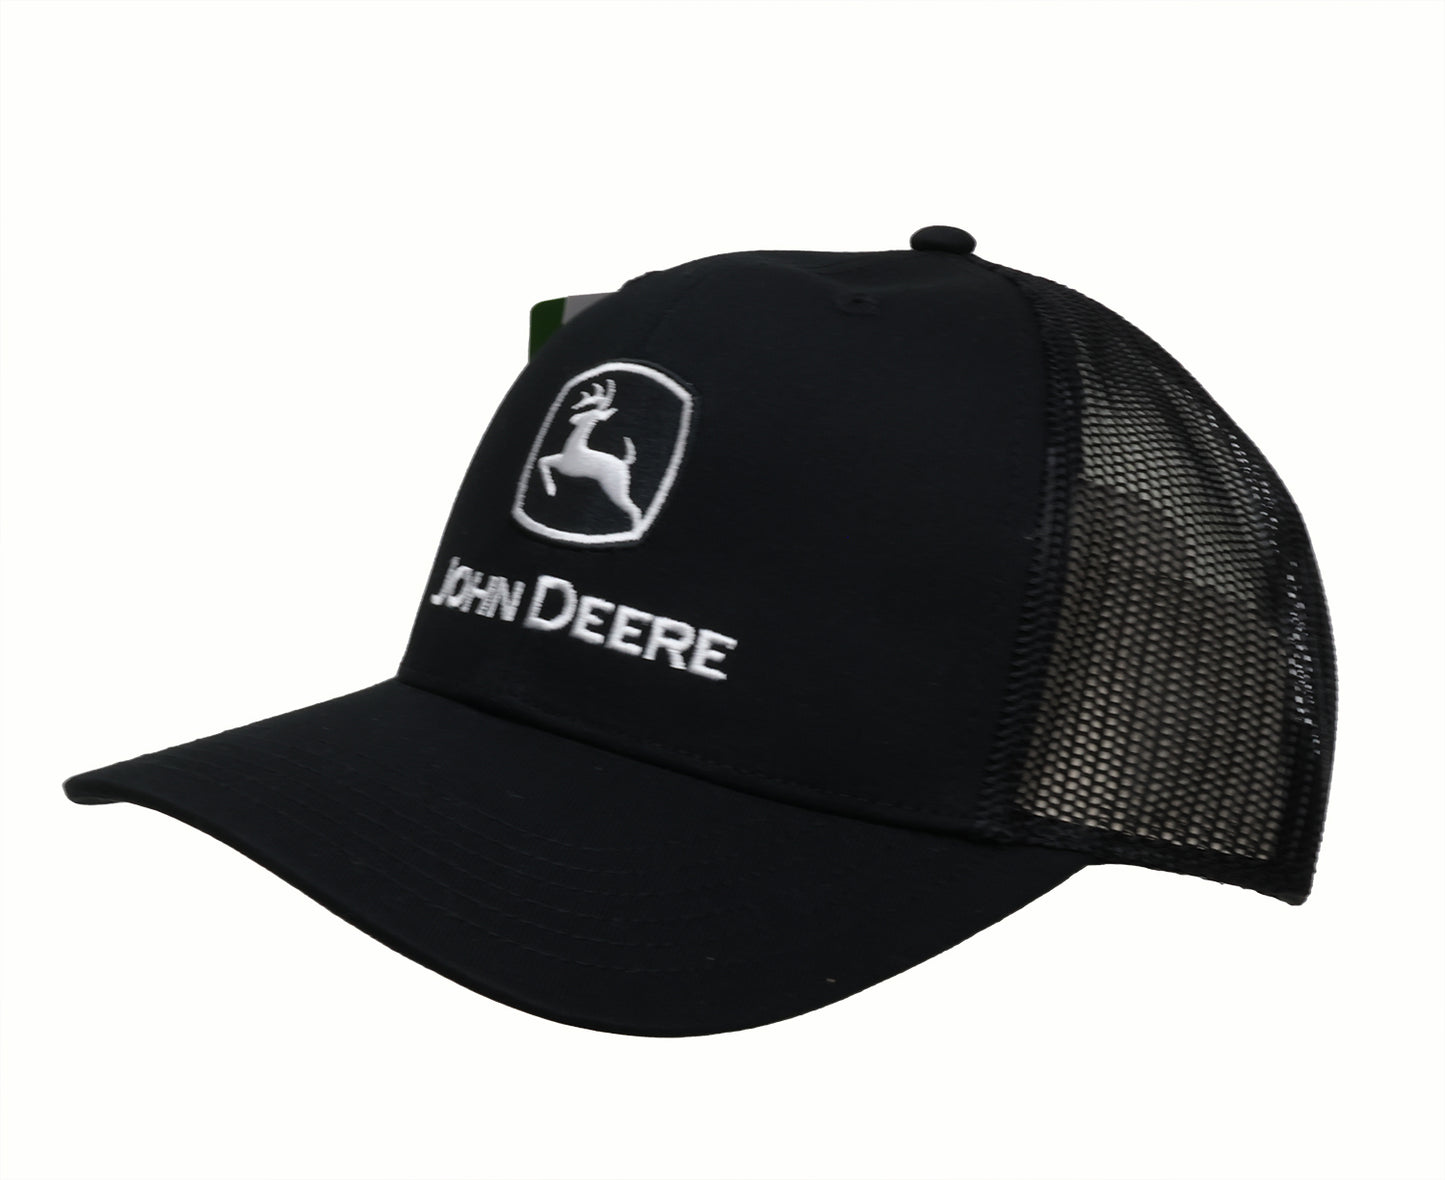 John Deere Men's Black w/ White Logo Embro Cap/Hat - LP86109